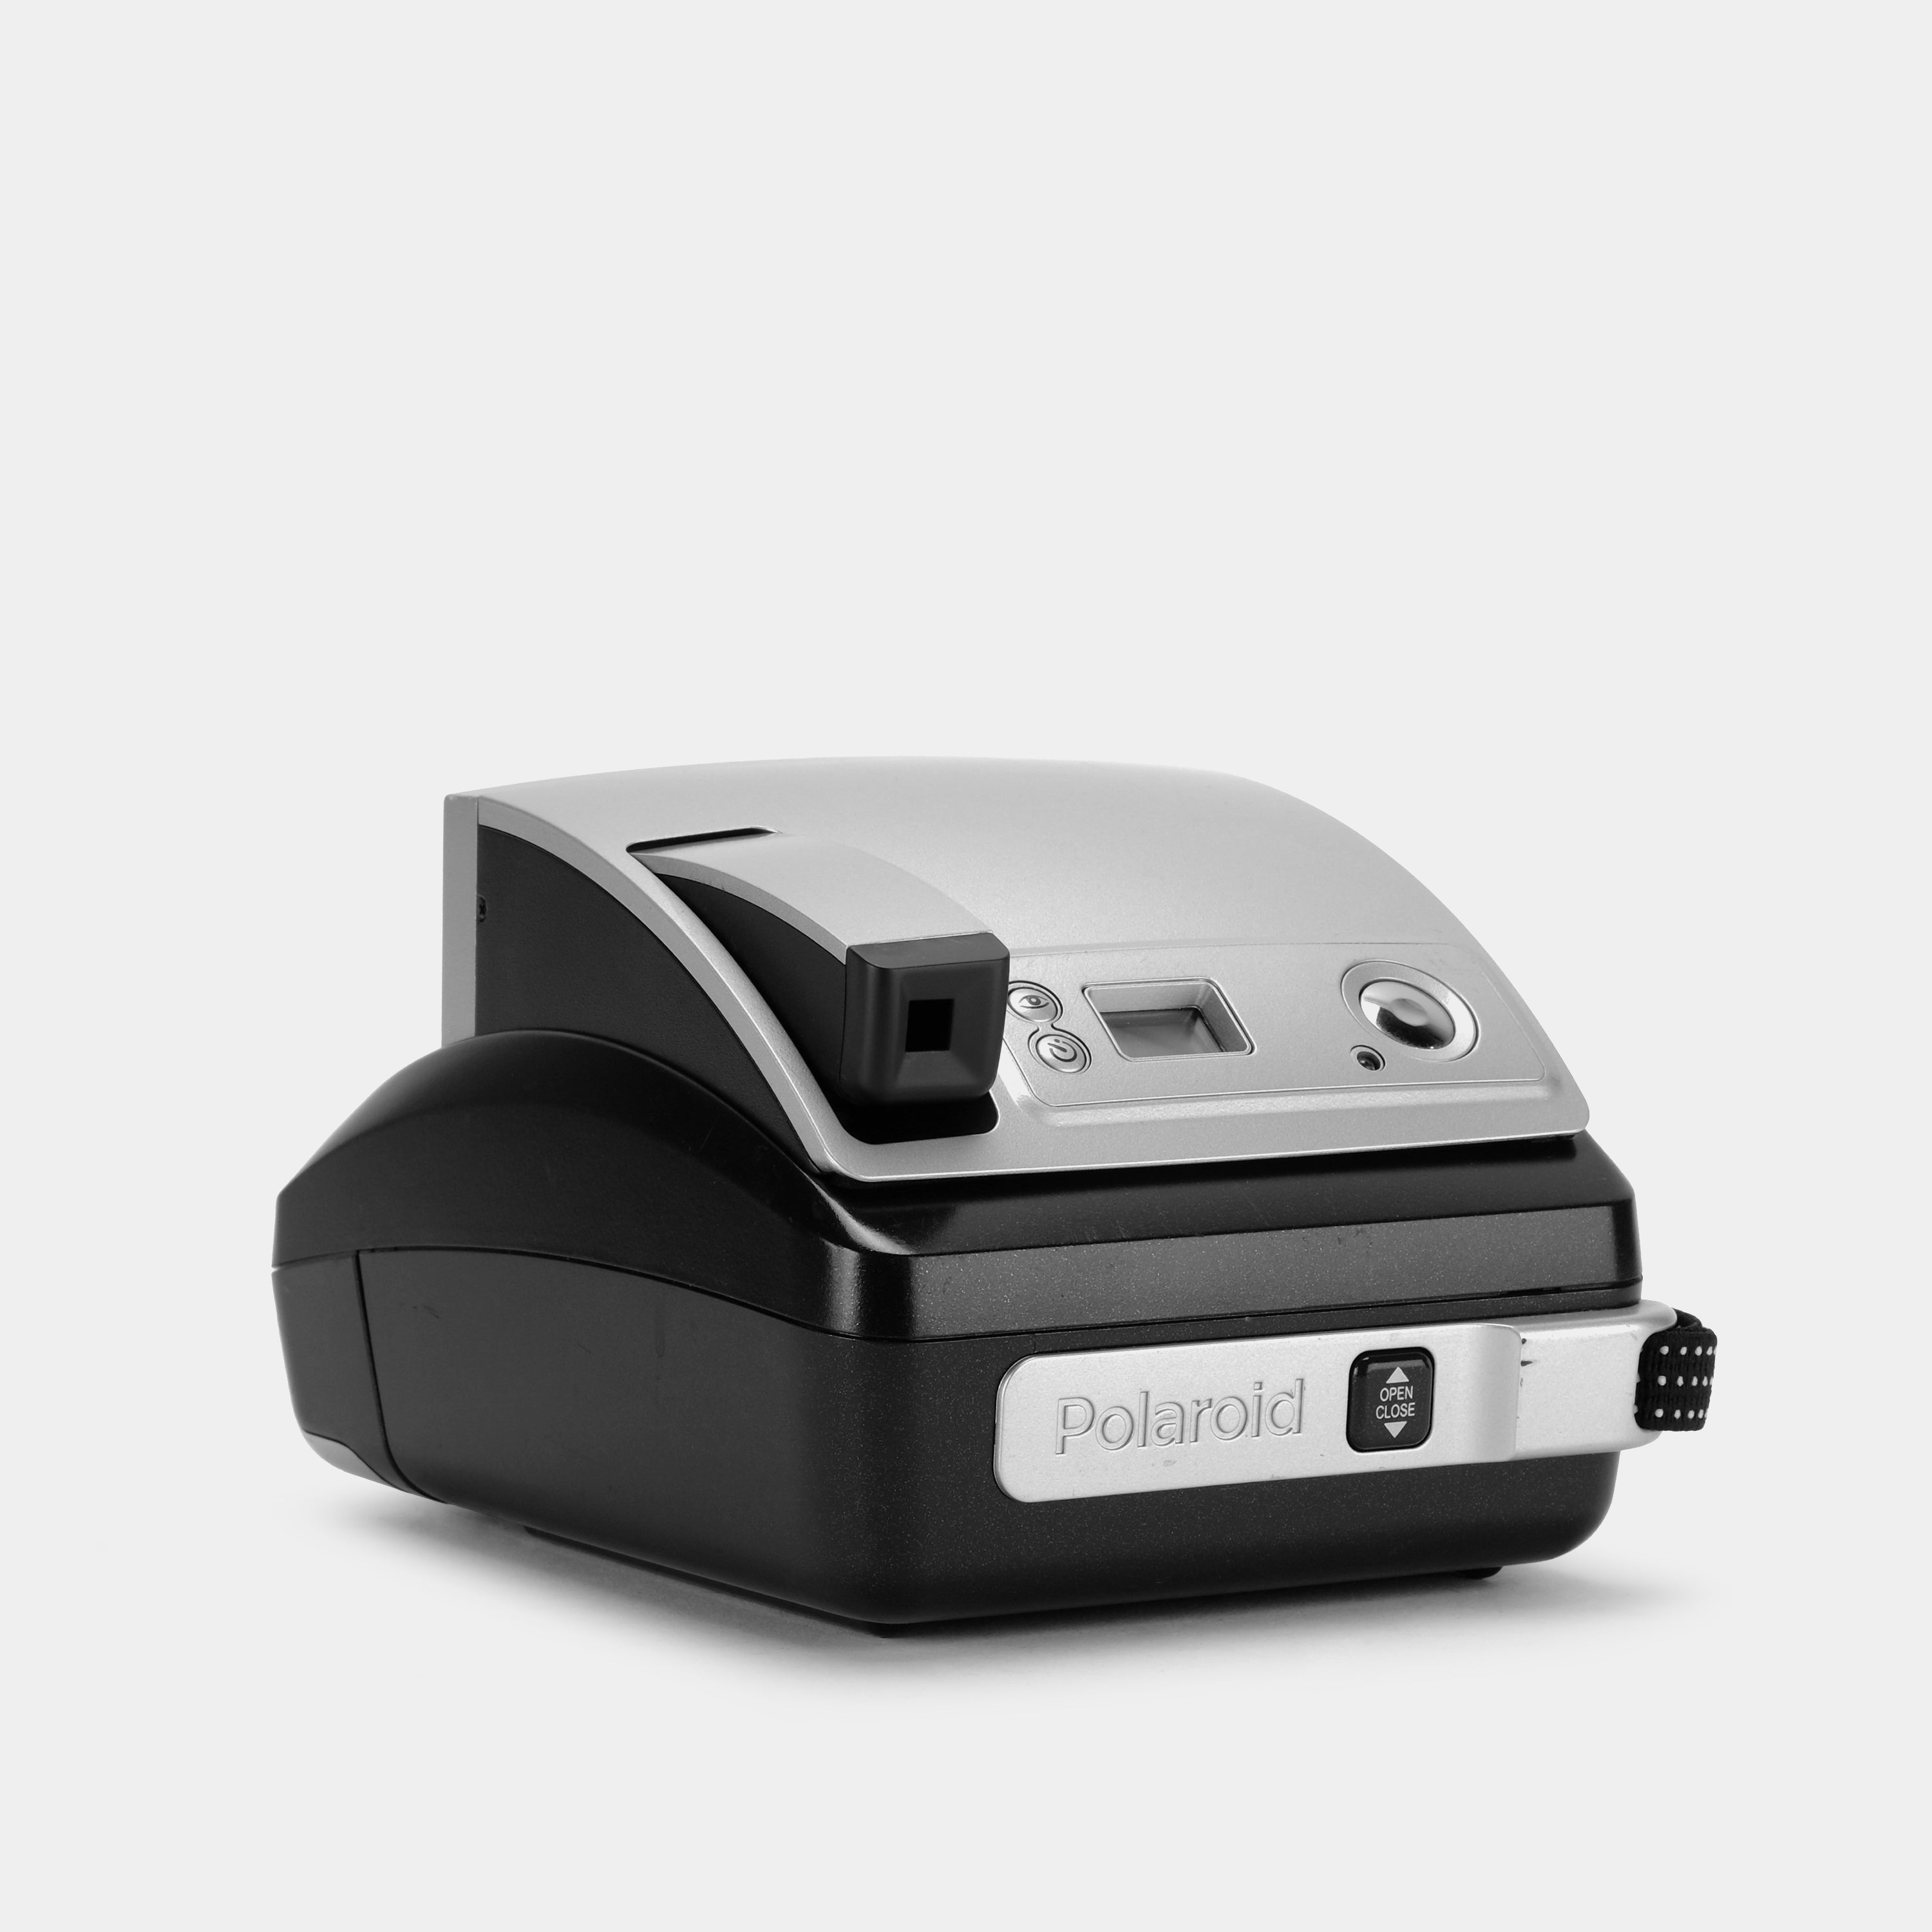 Polaroid 600 One600 Business Black and Silver  Instant Film Camera (B-Grade)